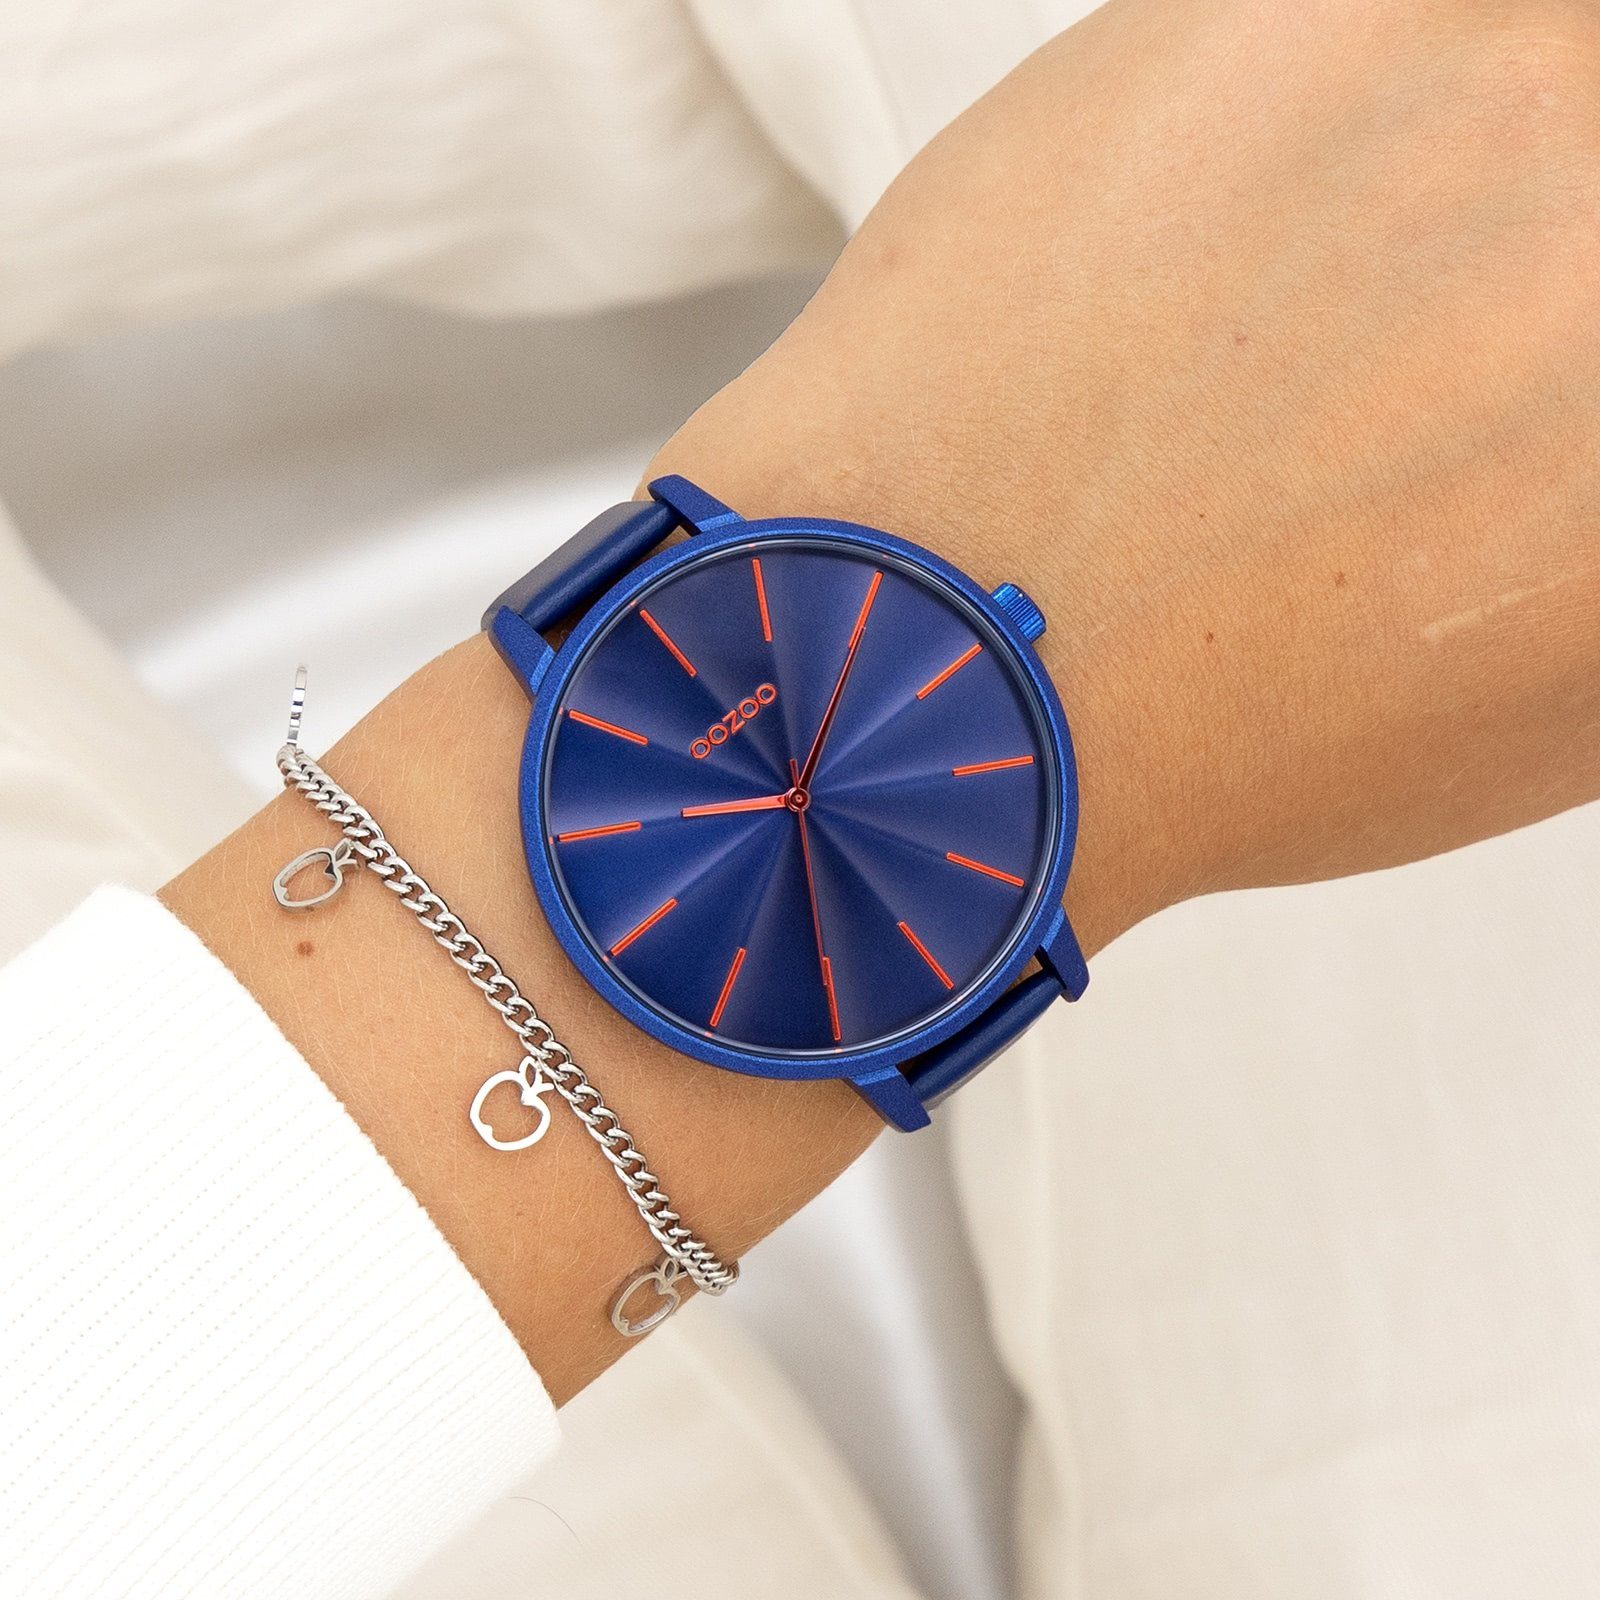 (ca. groß Armbanduhr Lederarmband, OOZOO rund, Quarzuhr Fashion-Style Timepieces Analog, Damenuhr extra Damen 48mm) Oozoo